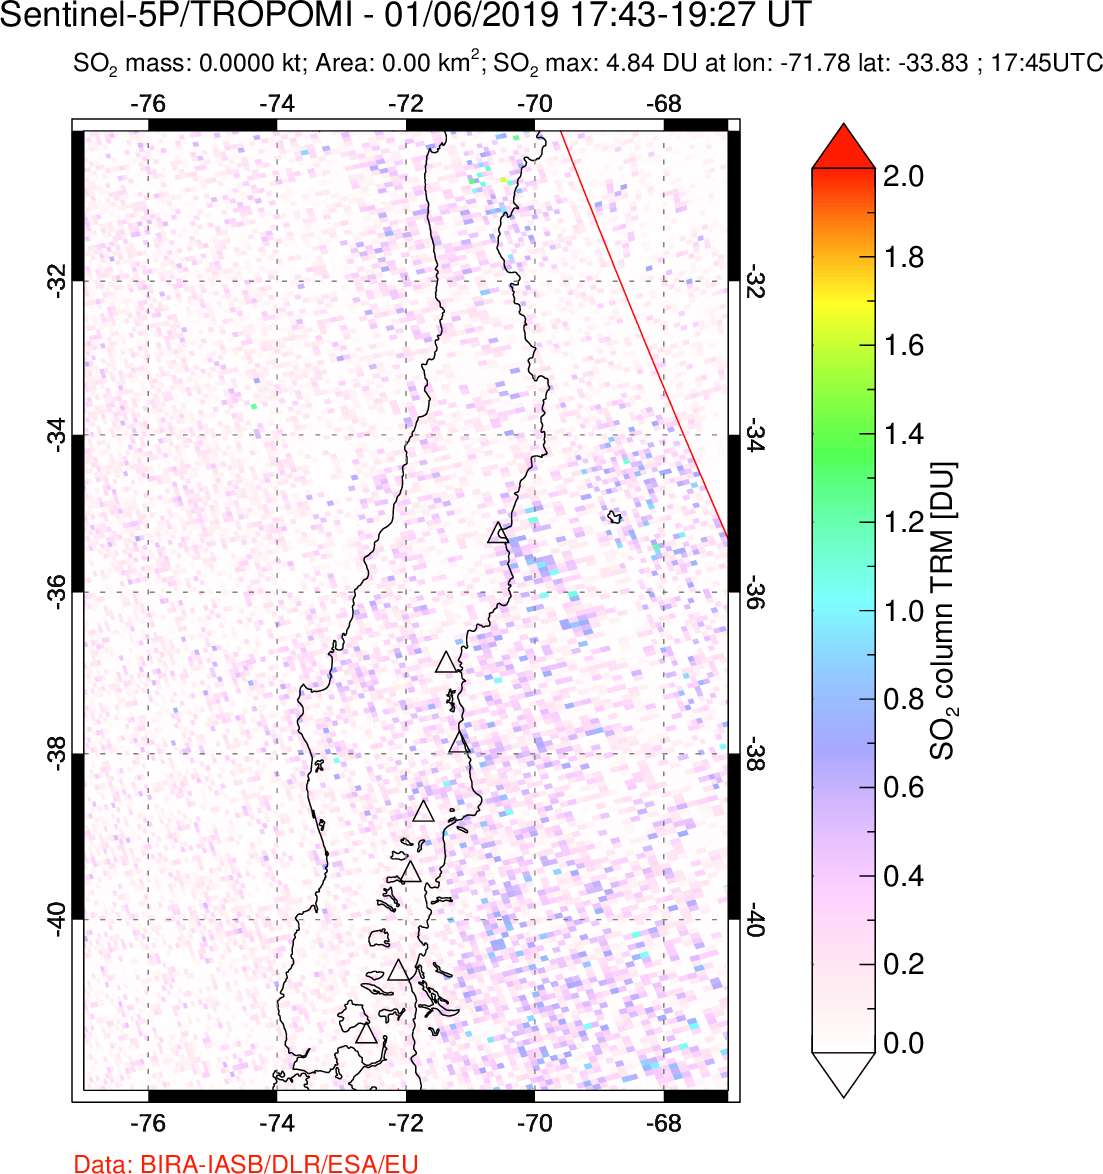 A sulfur dioxide image over Central Chile on Jan 06, 2019.